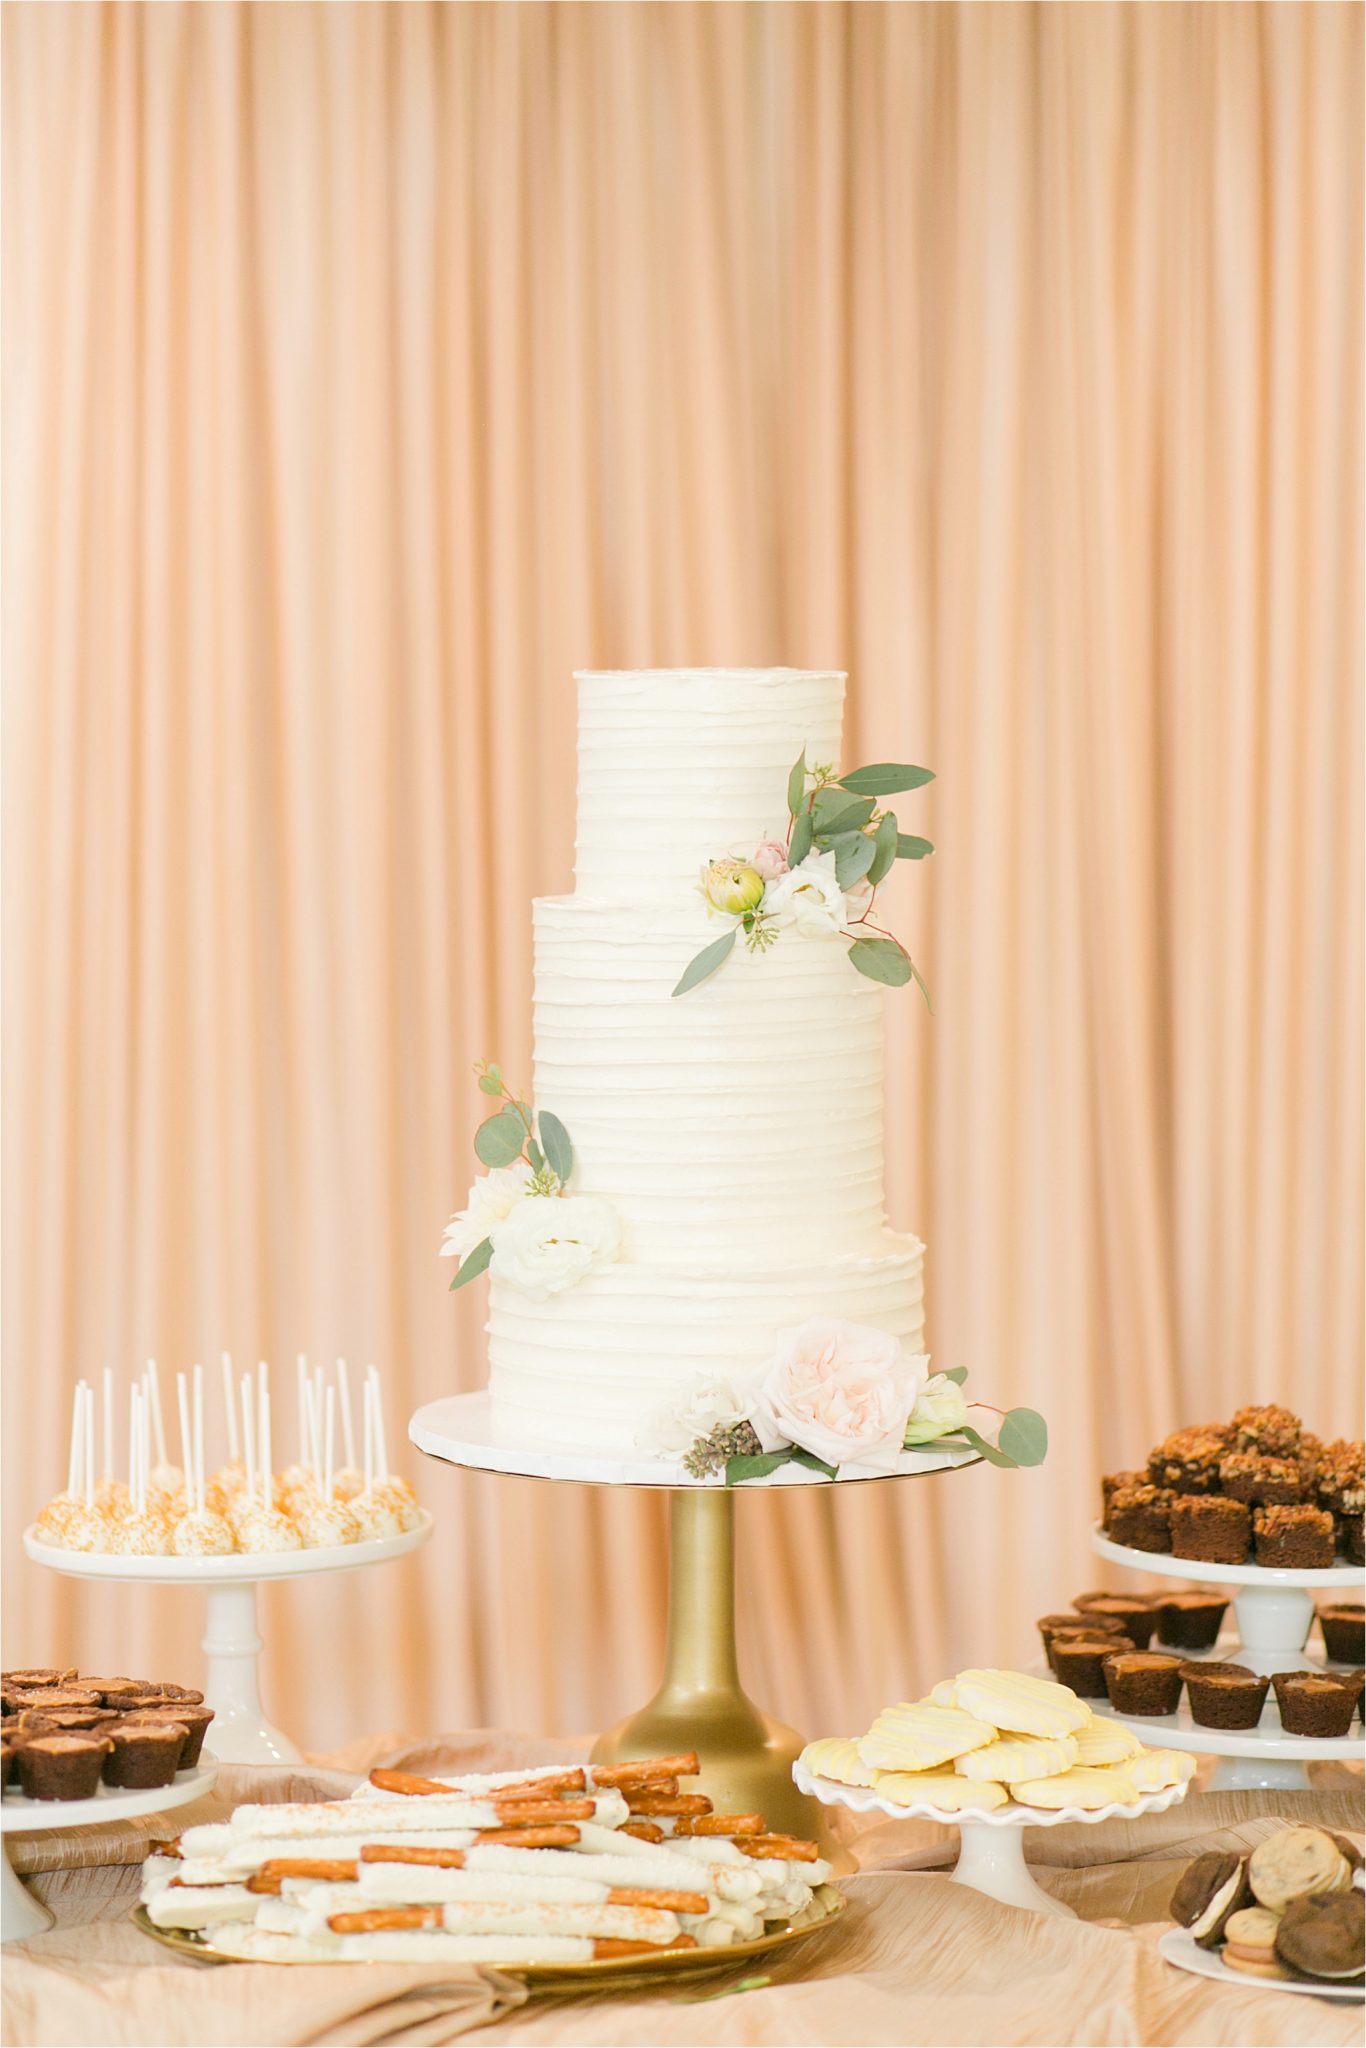 wedding cake-EllenJay Dessert Bar-dessert table-wedding-reception-3 tier wedding cakes